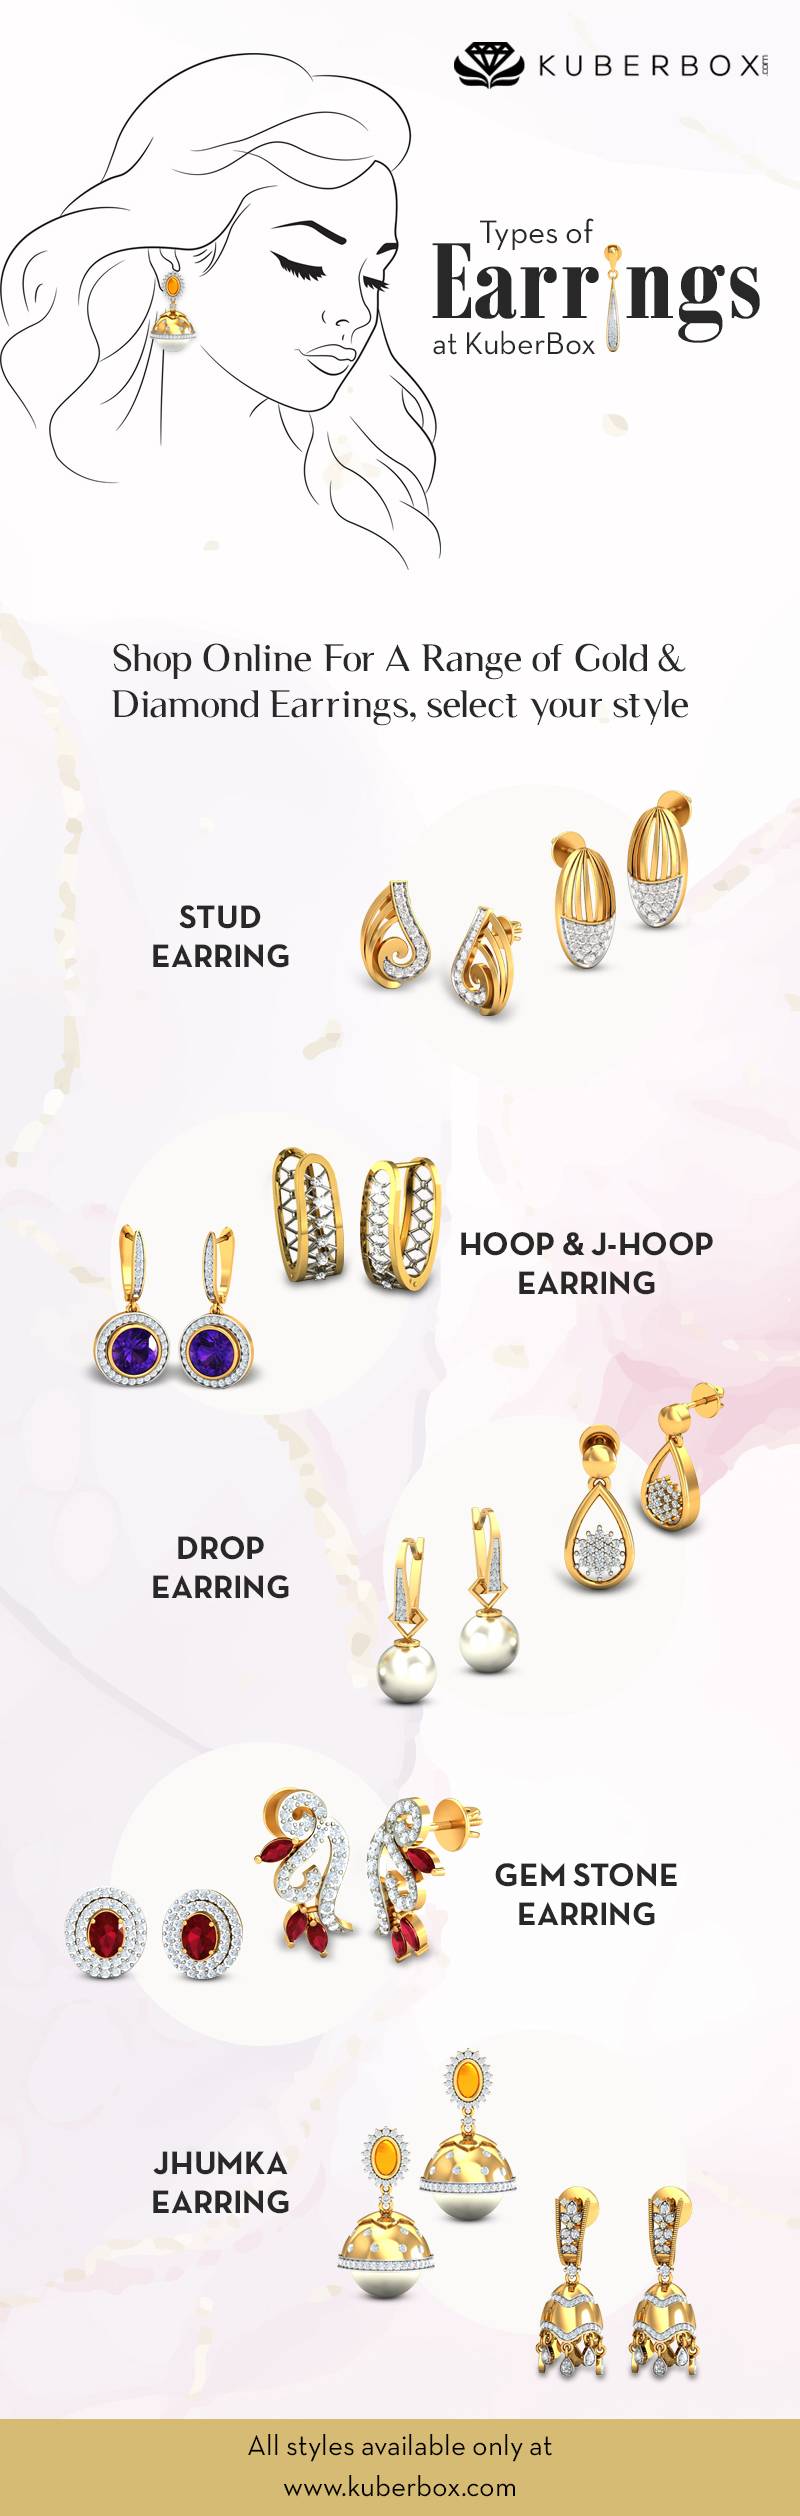 types of earrings at kuberbox